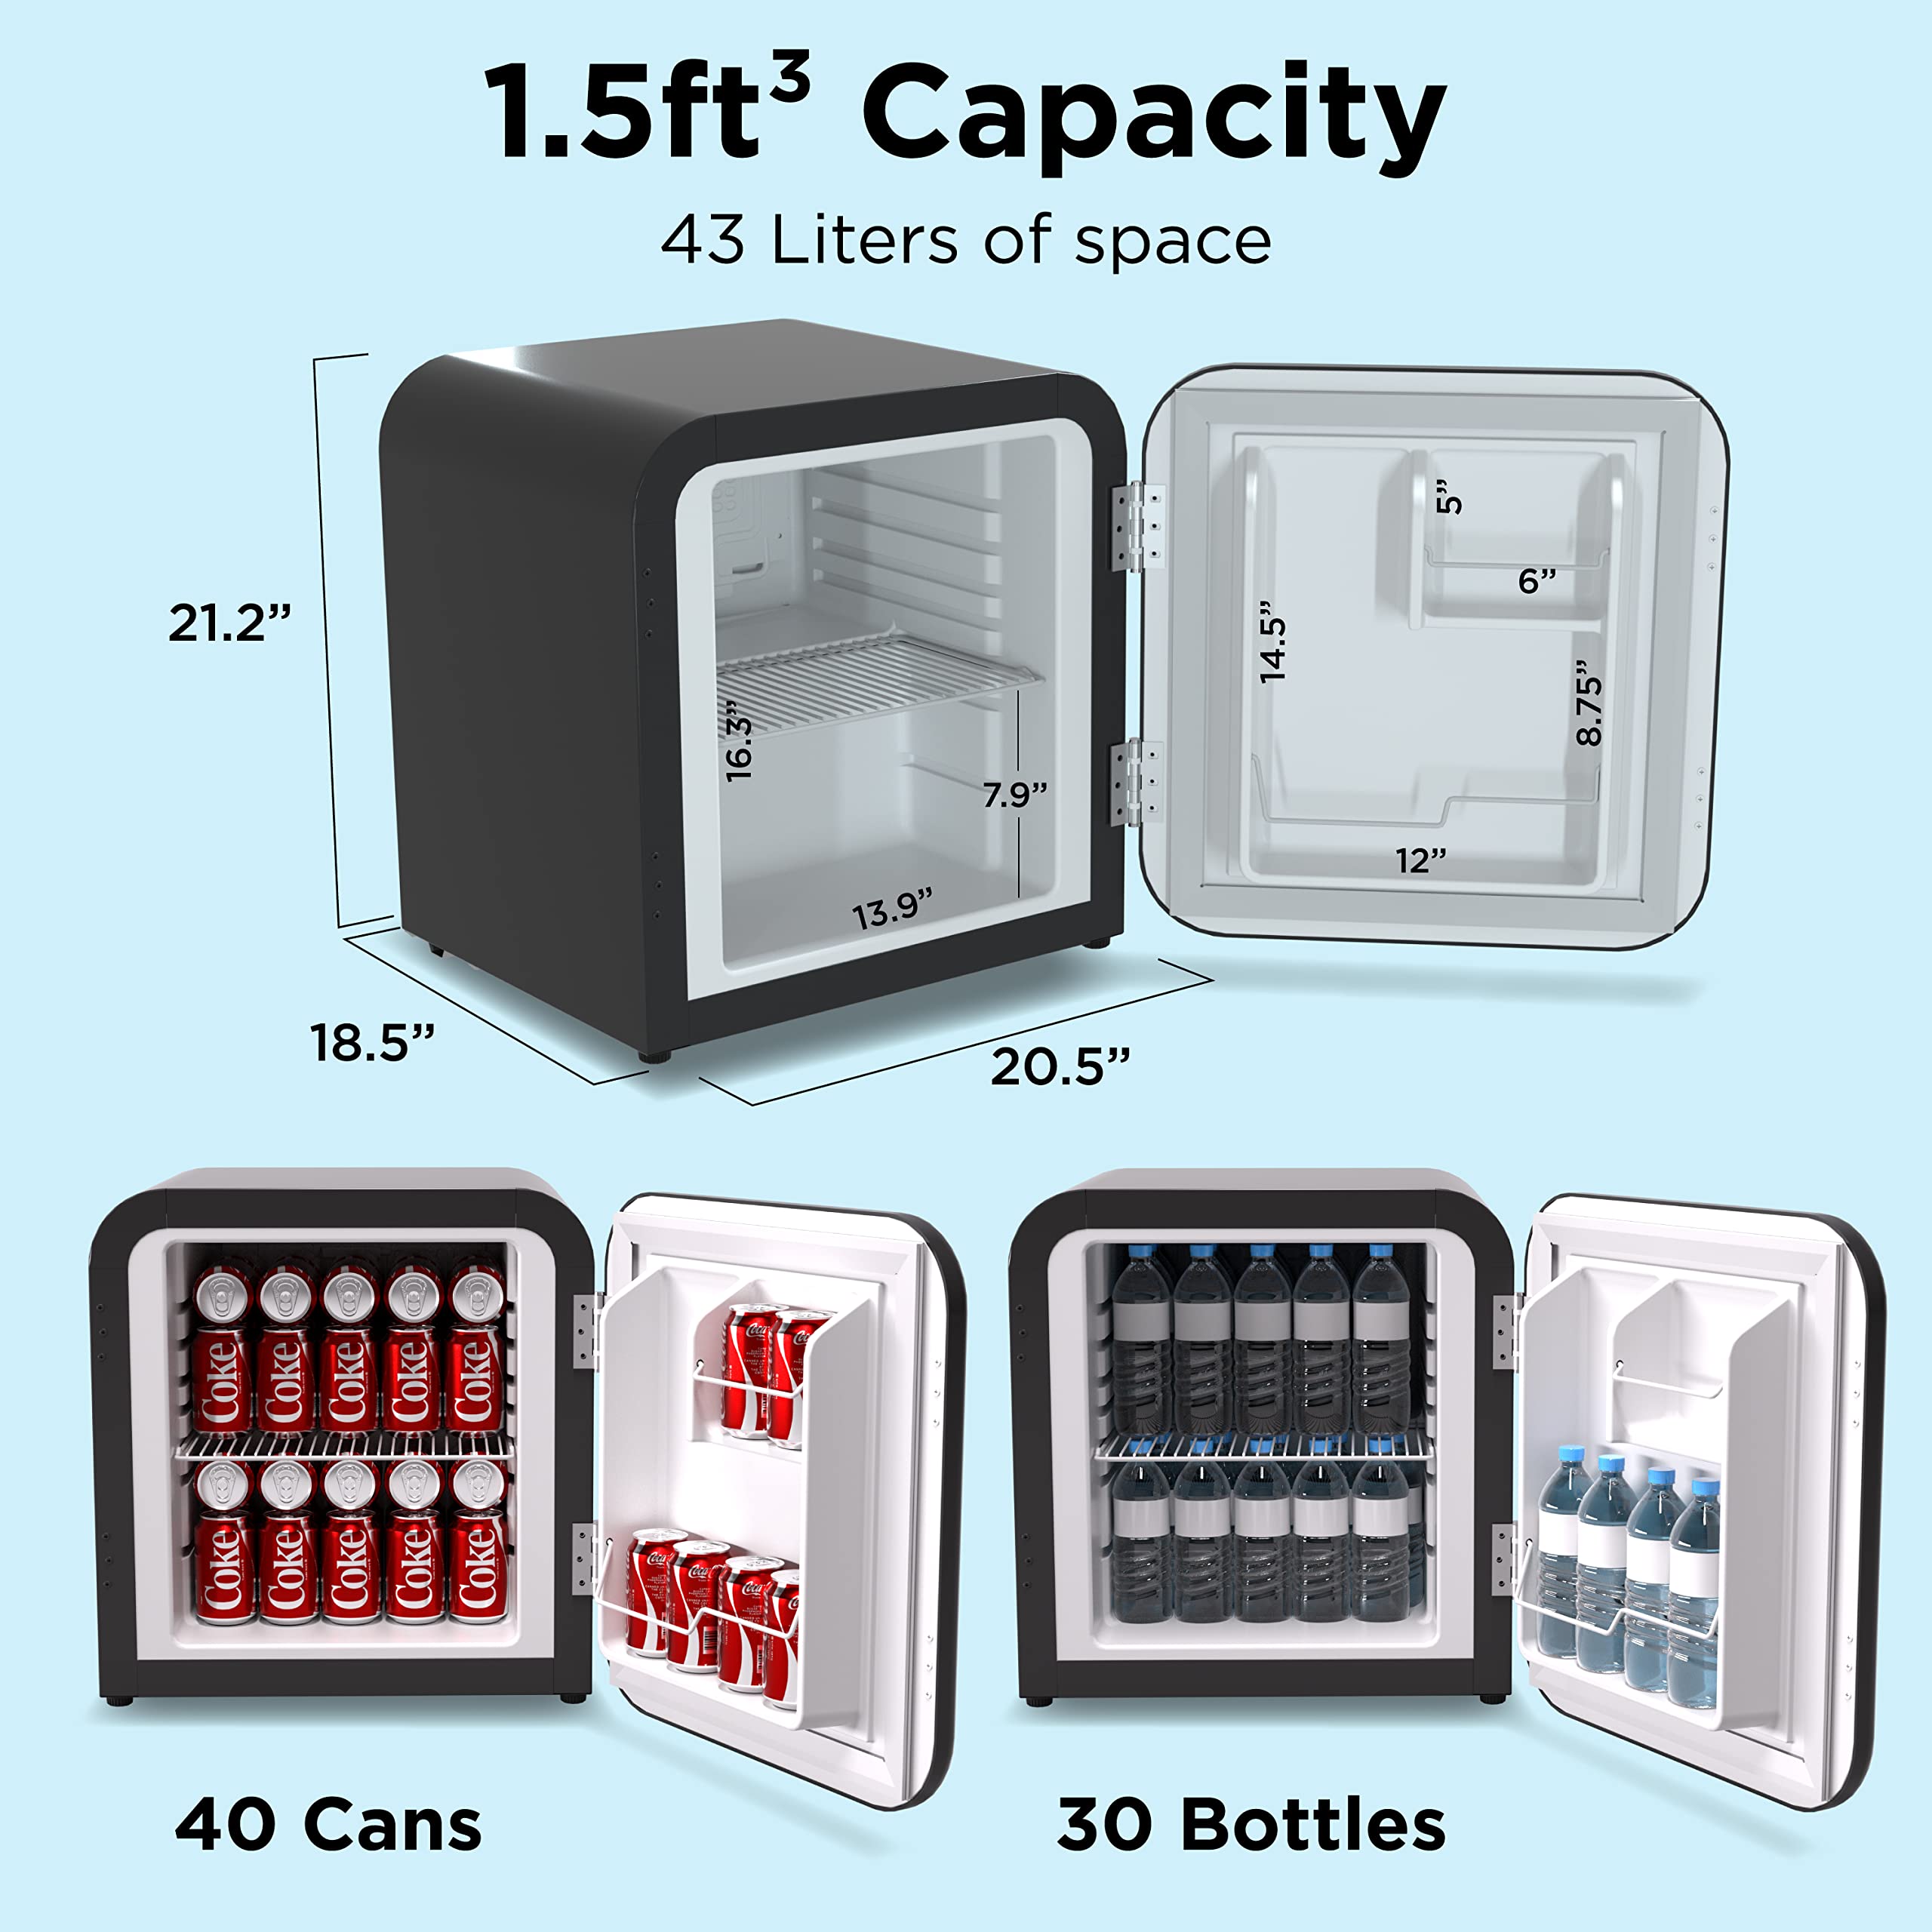 Husky Retro Mini Refrigerator with 1.5 Cu.ft./43L Capacity, Countertop Black Mini Fridge with Reversible Door, Retro Mini Fridge, Freestanding Retro Small Fridge for Bedroom, Bar, and Office